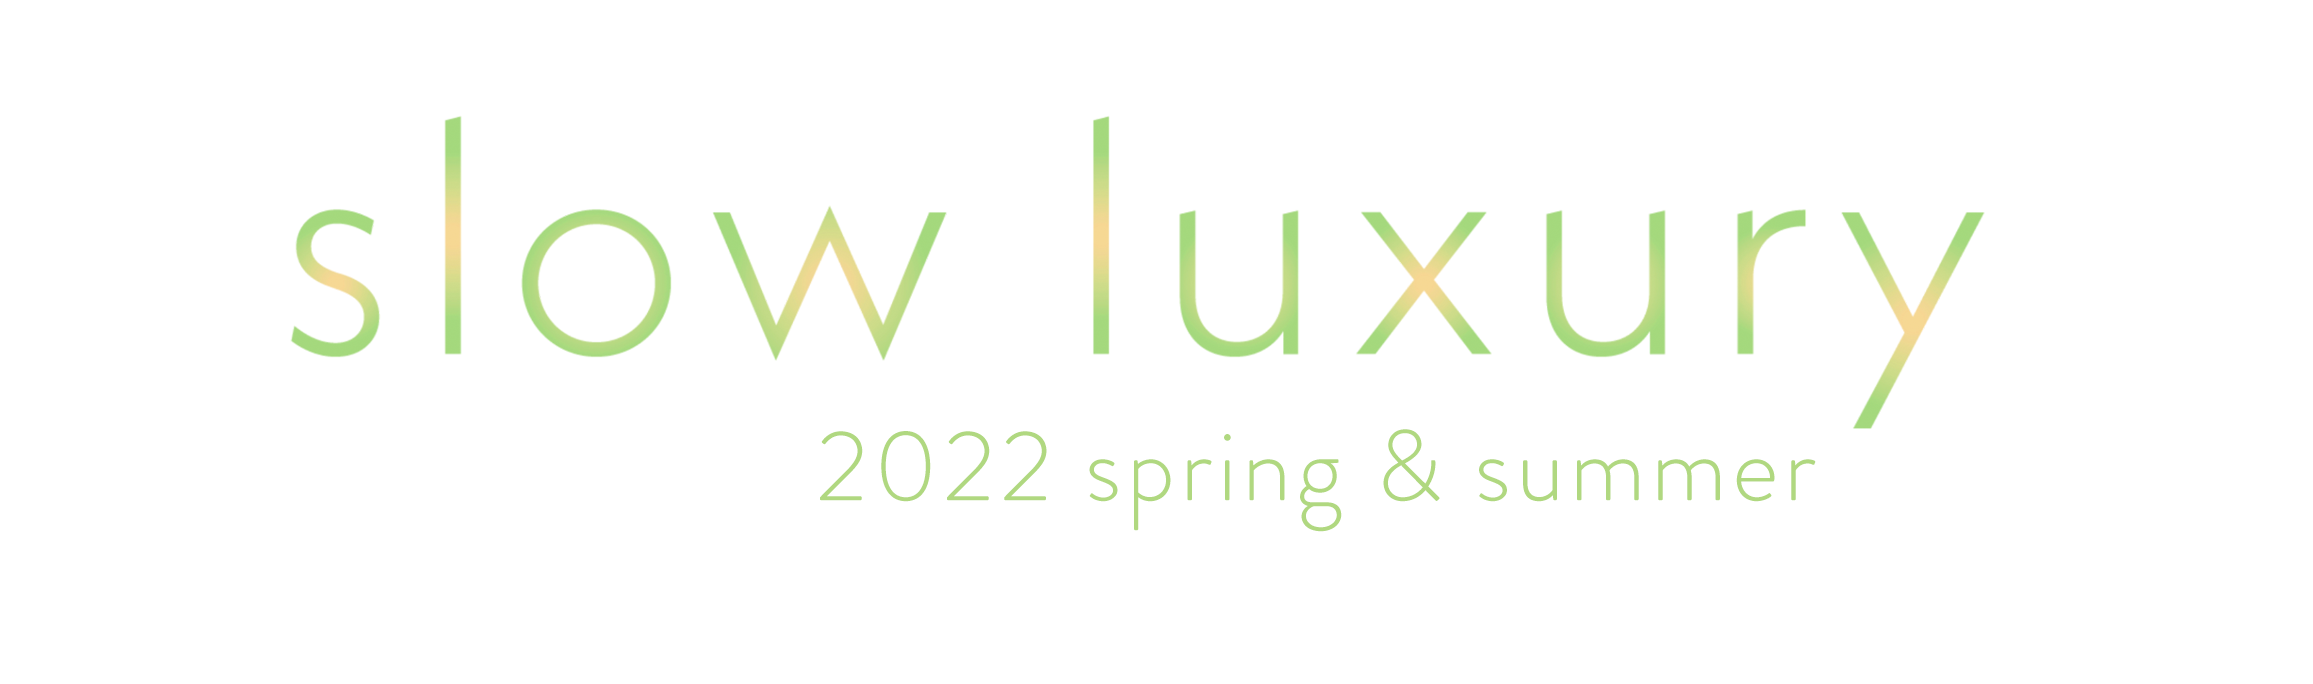 2022ss
slow luxury
2022春夏
ファッショントレンド